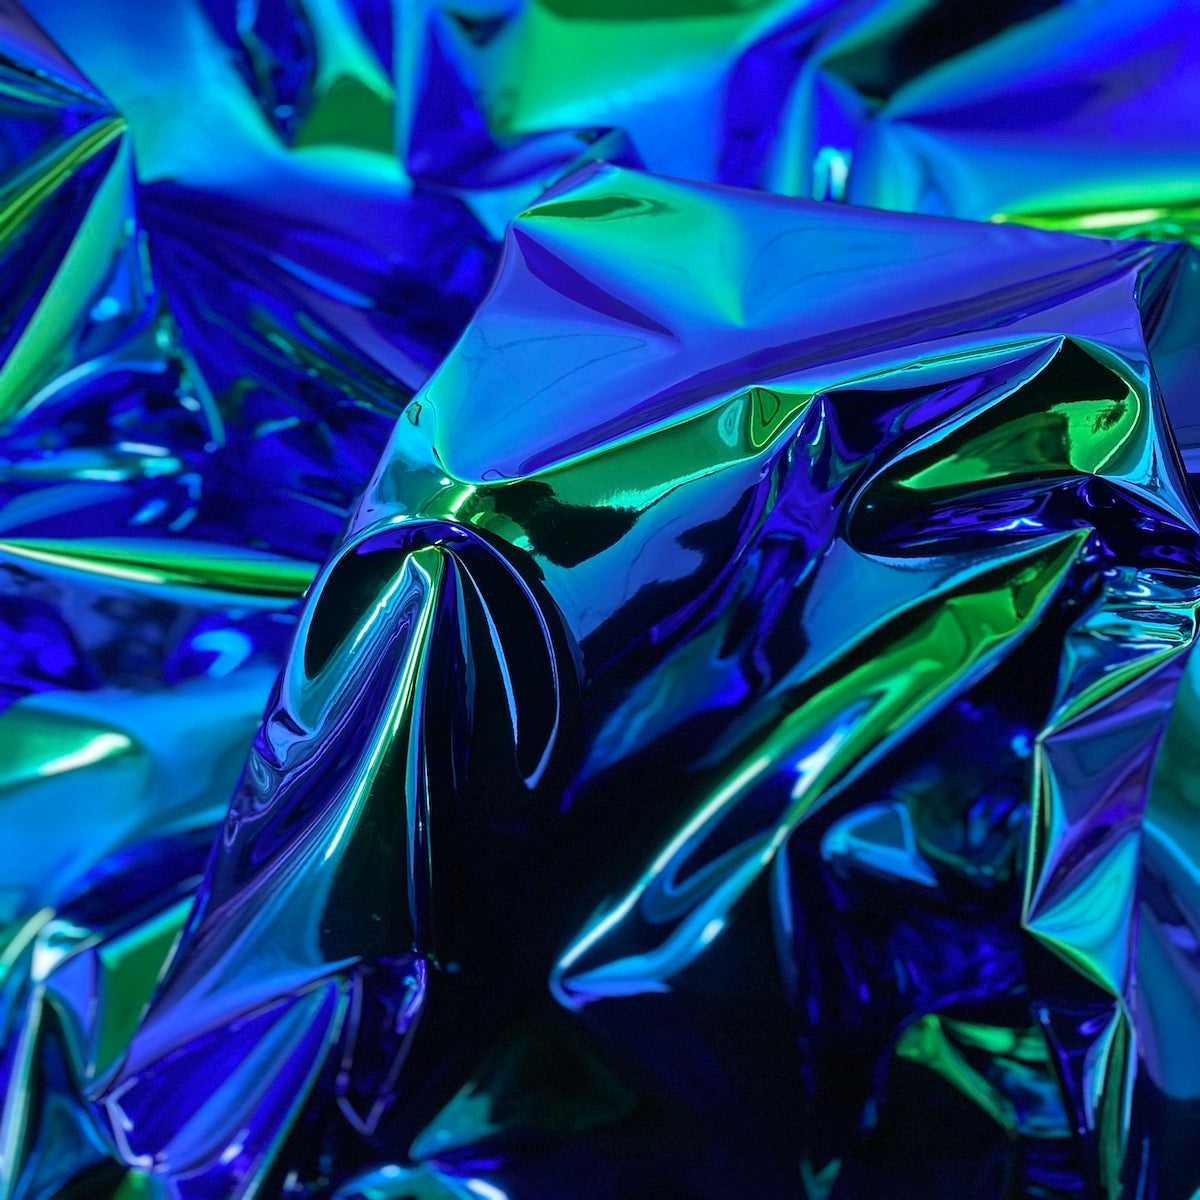 Pearl Blue Iridescent Chrome Reflective Mirror Vinyl Fabric